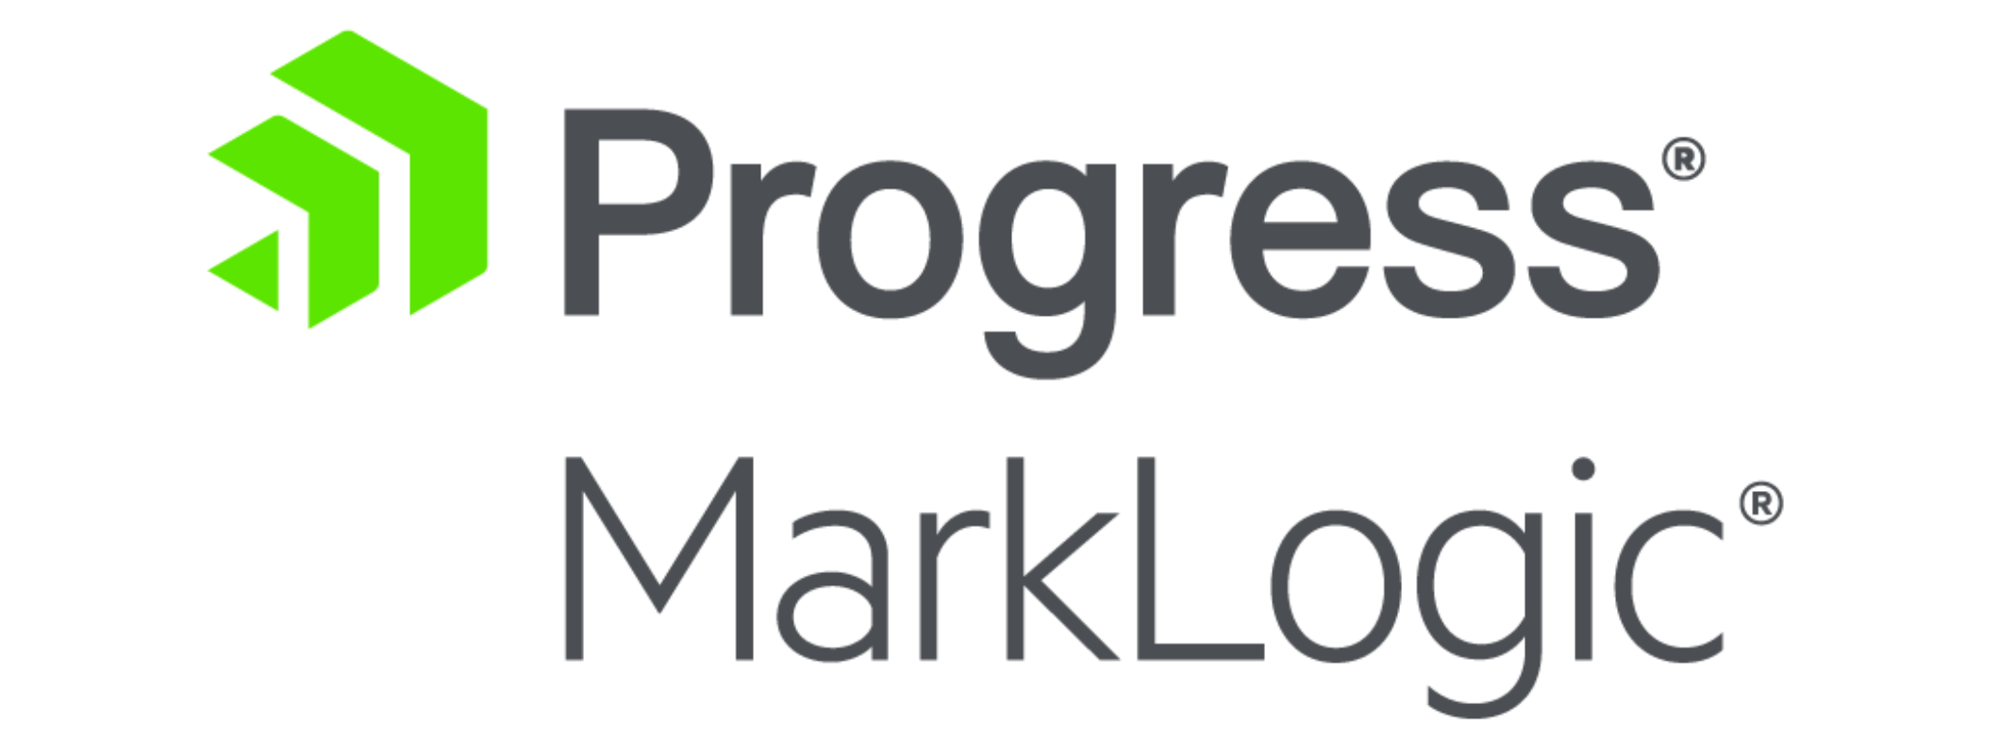 Progress x MarkLogic